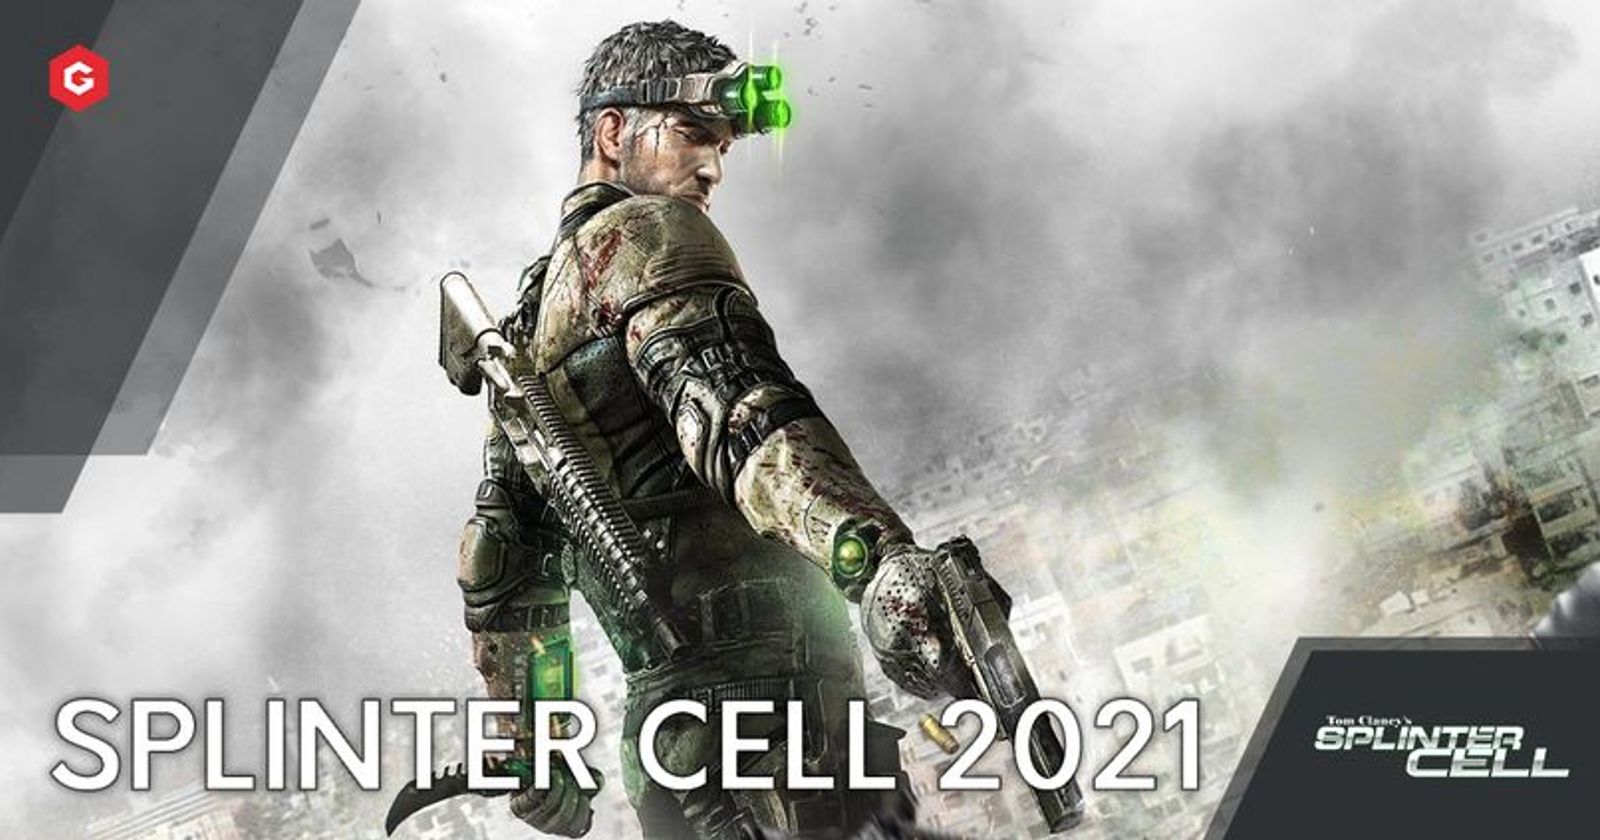 Tom Clancy's Splinter Cell: Blacklist - Twitch